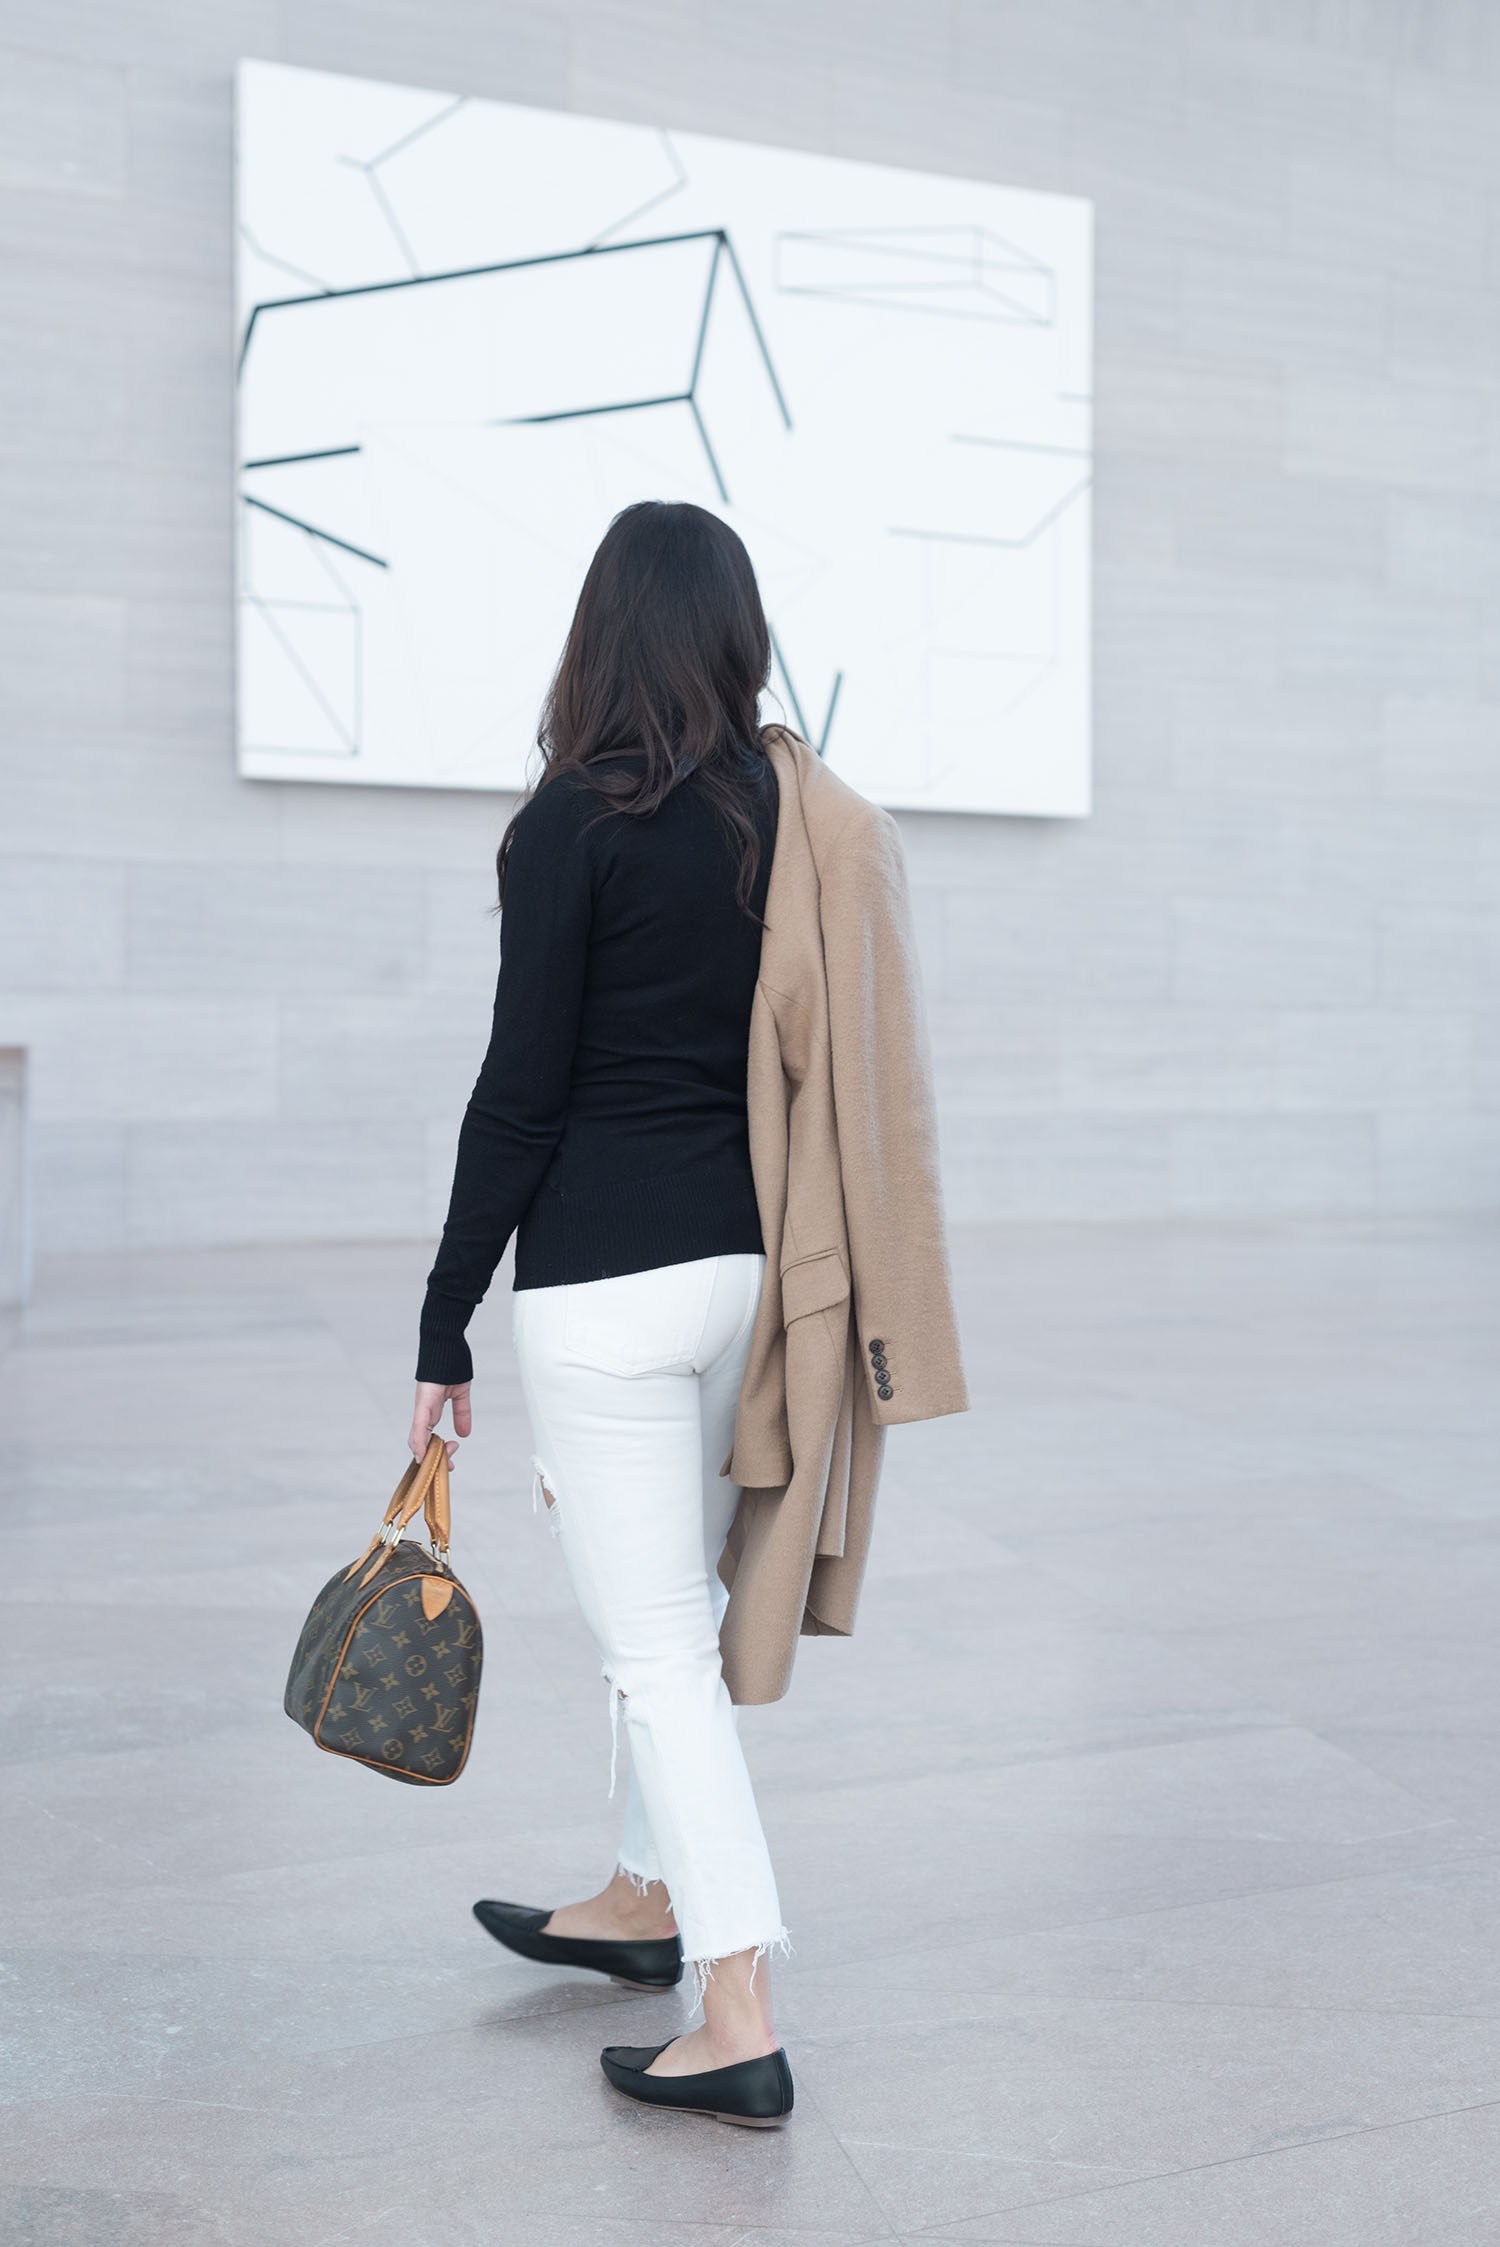 Best Canadian fashion blogger Cee Fardoe of Coco & Vera wears white Grlfrnd jeans and carries a Louis Vuitton Speedy 25 handbag